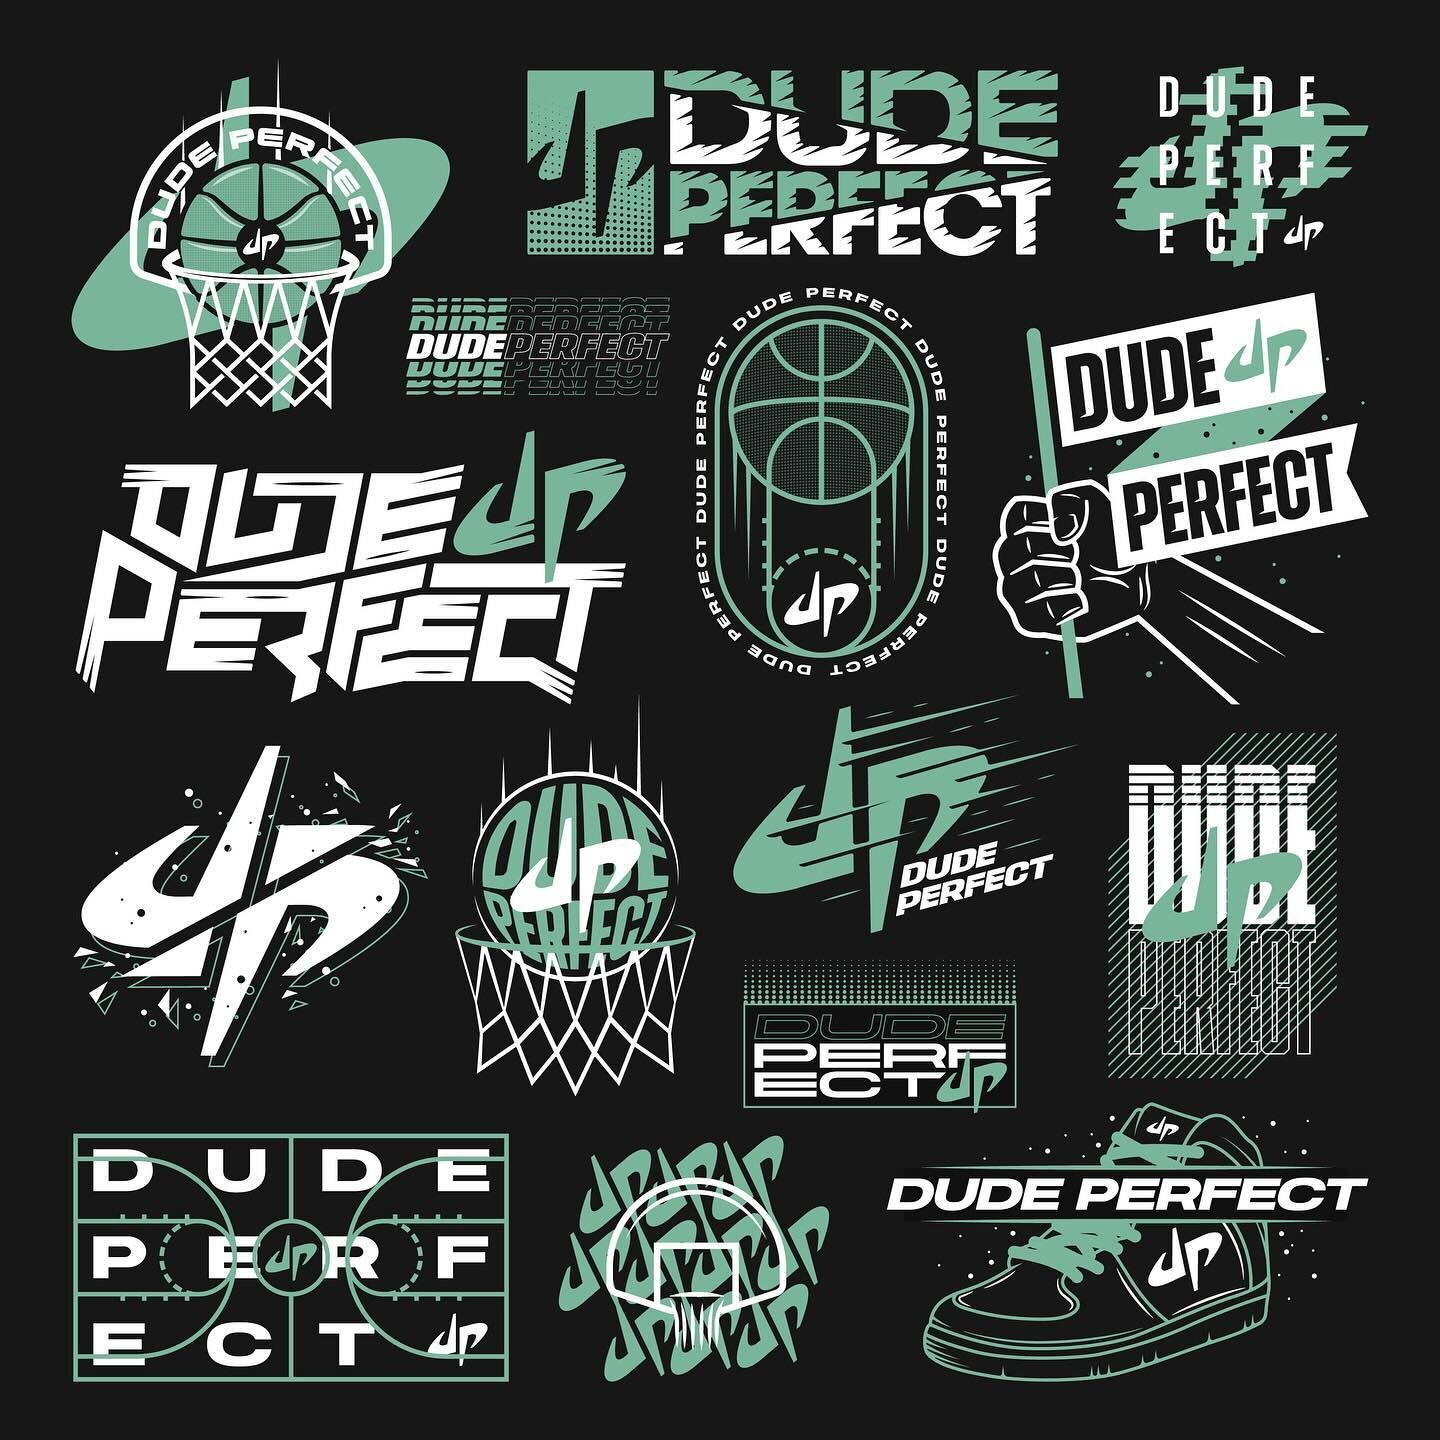 Apparel design collection for Dude Perfect
.
.
.
.
#logodesigners #logodesignersclub #sportslogo #logocollection #logoinspire #dudeperfect #brandidentitydesign #brandidentity